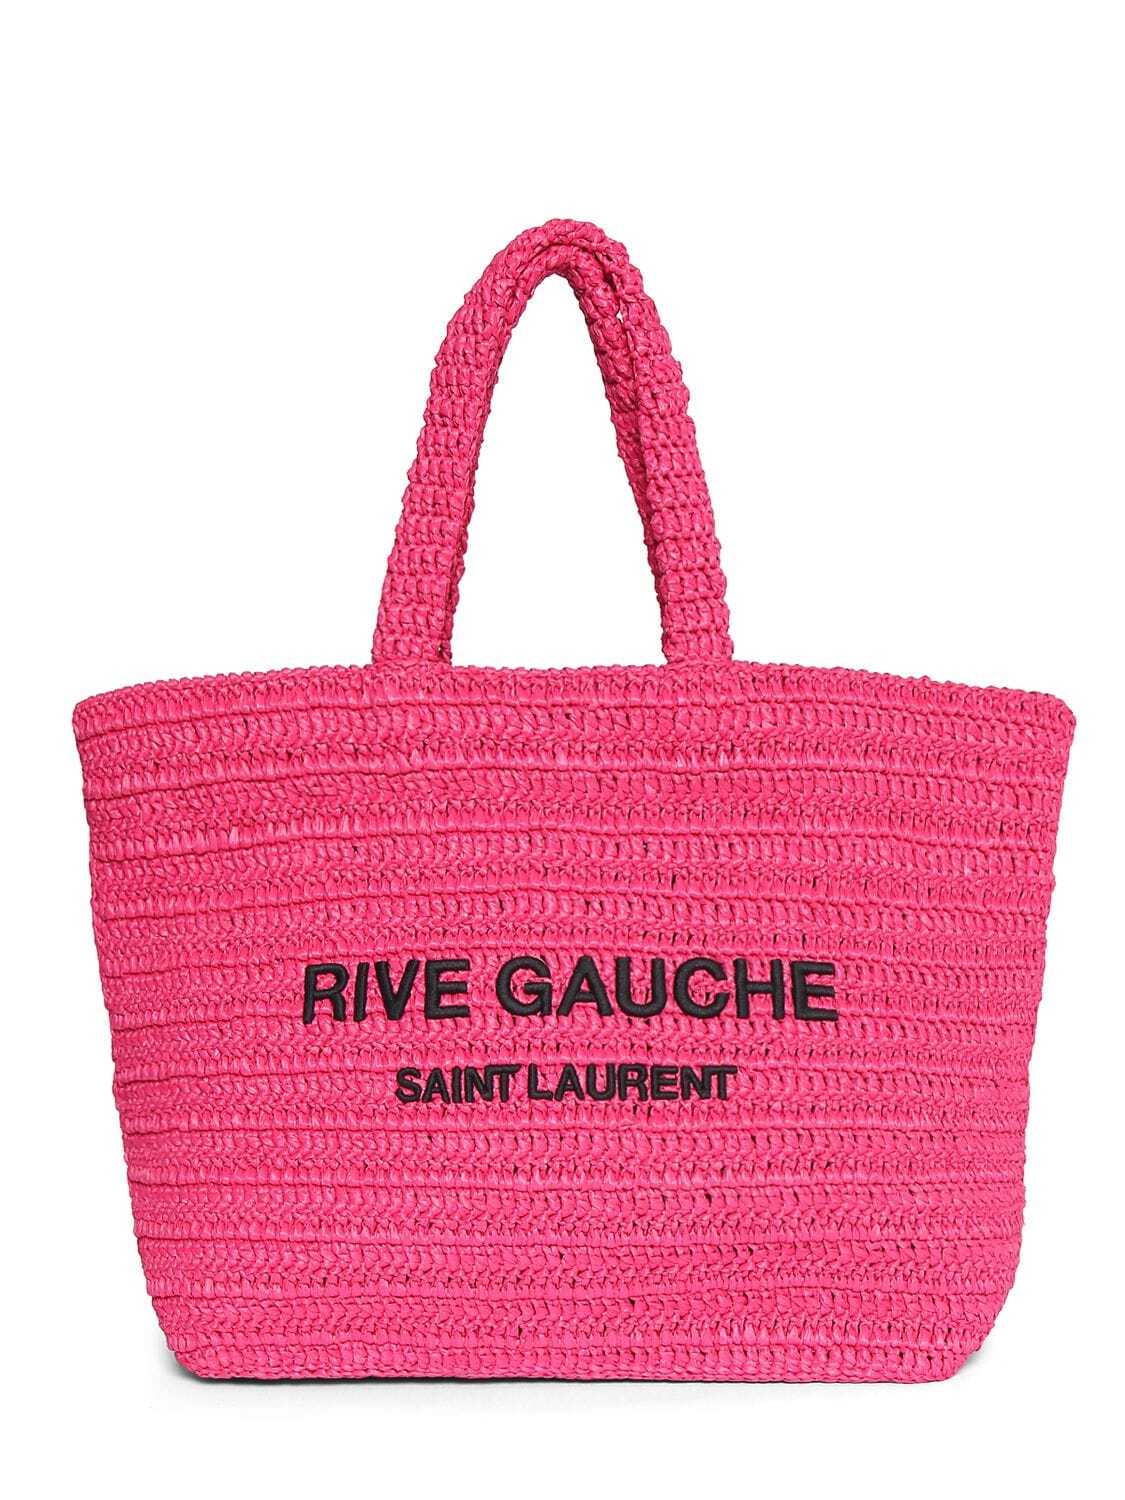 SAINT LAURENT Rive Gauche Viscose Tote Bag in pink